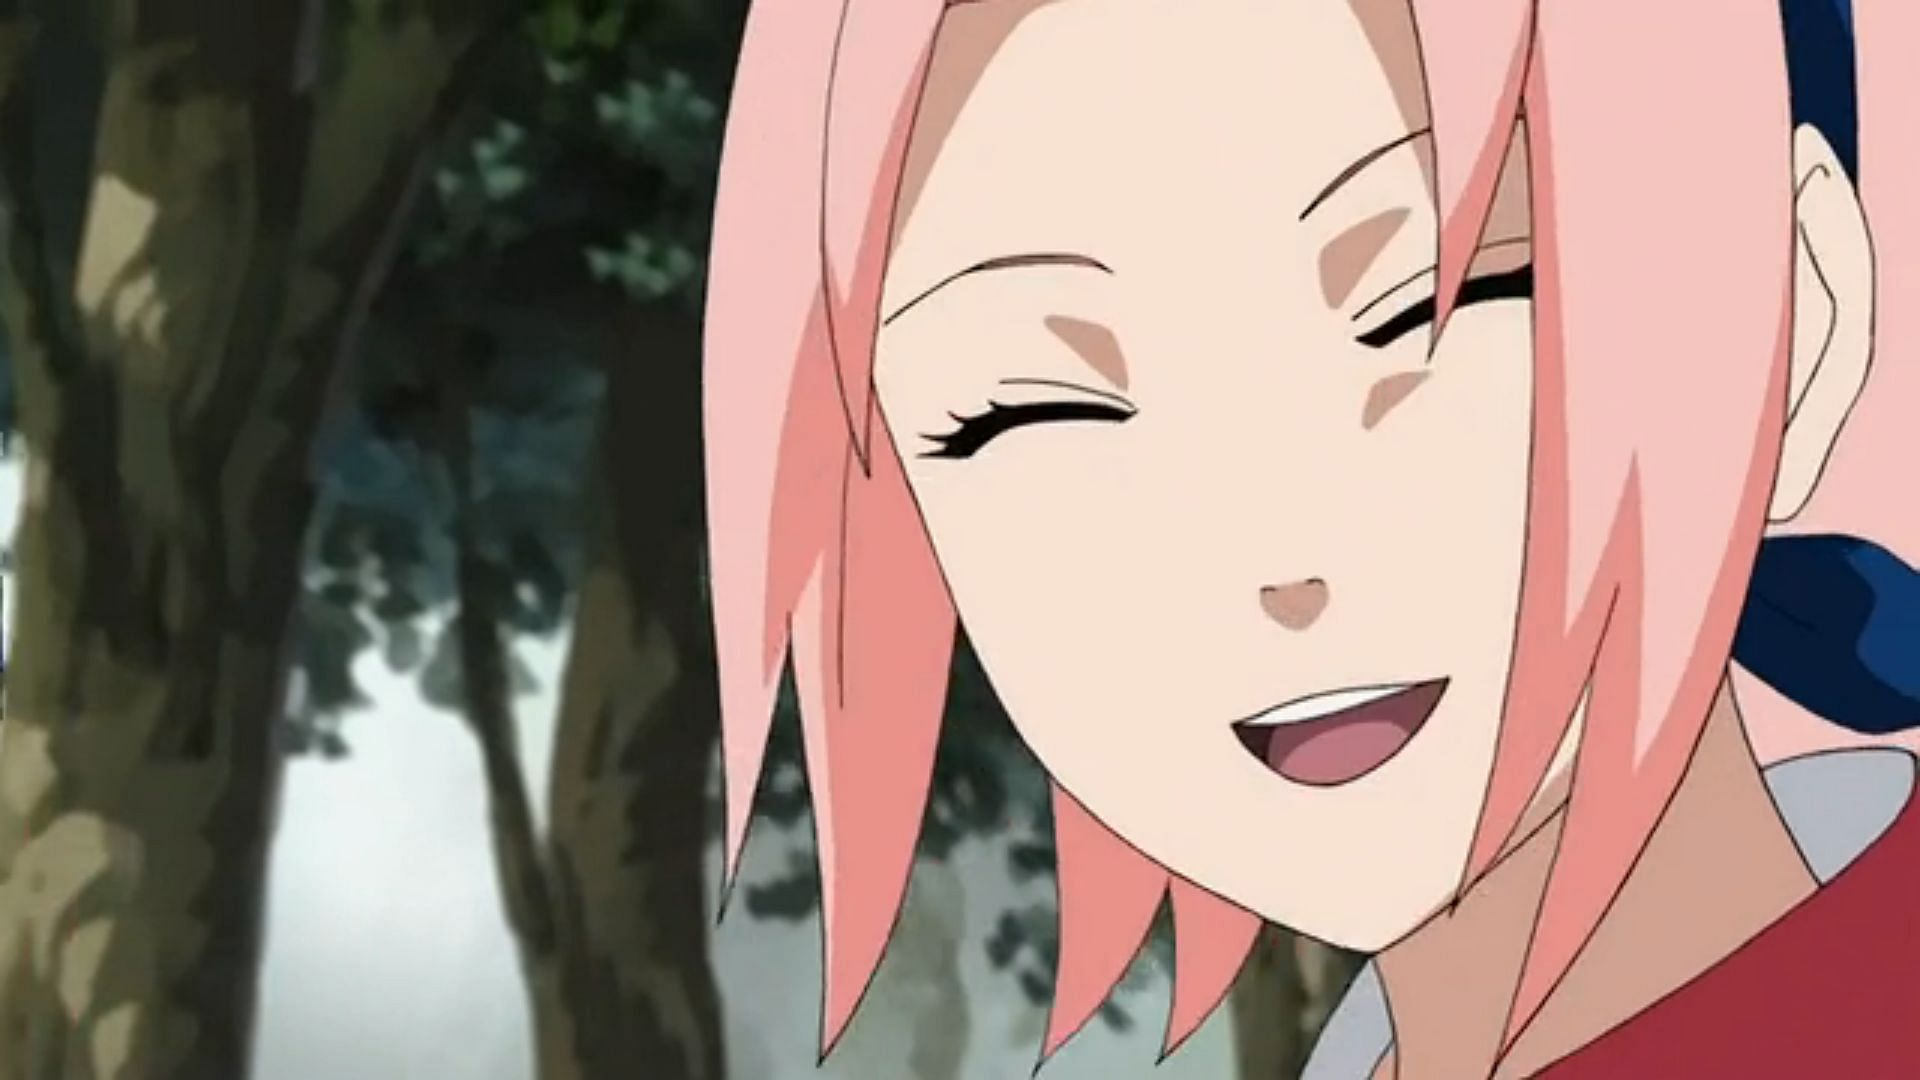 Sakura as seen in the series